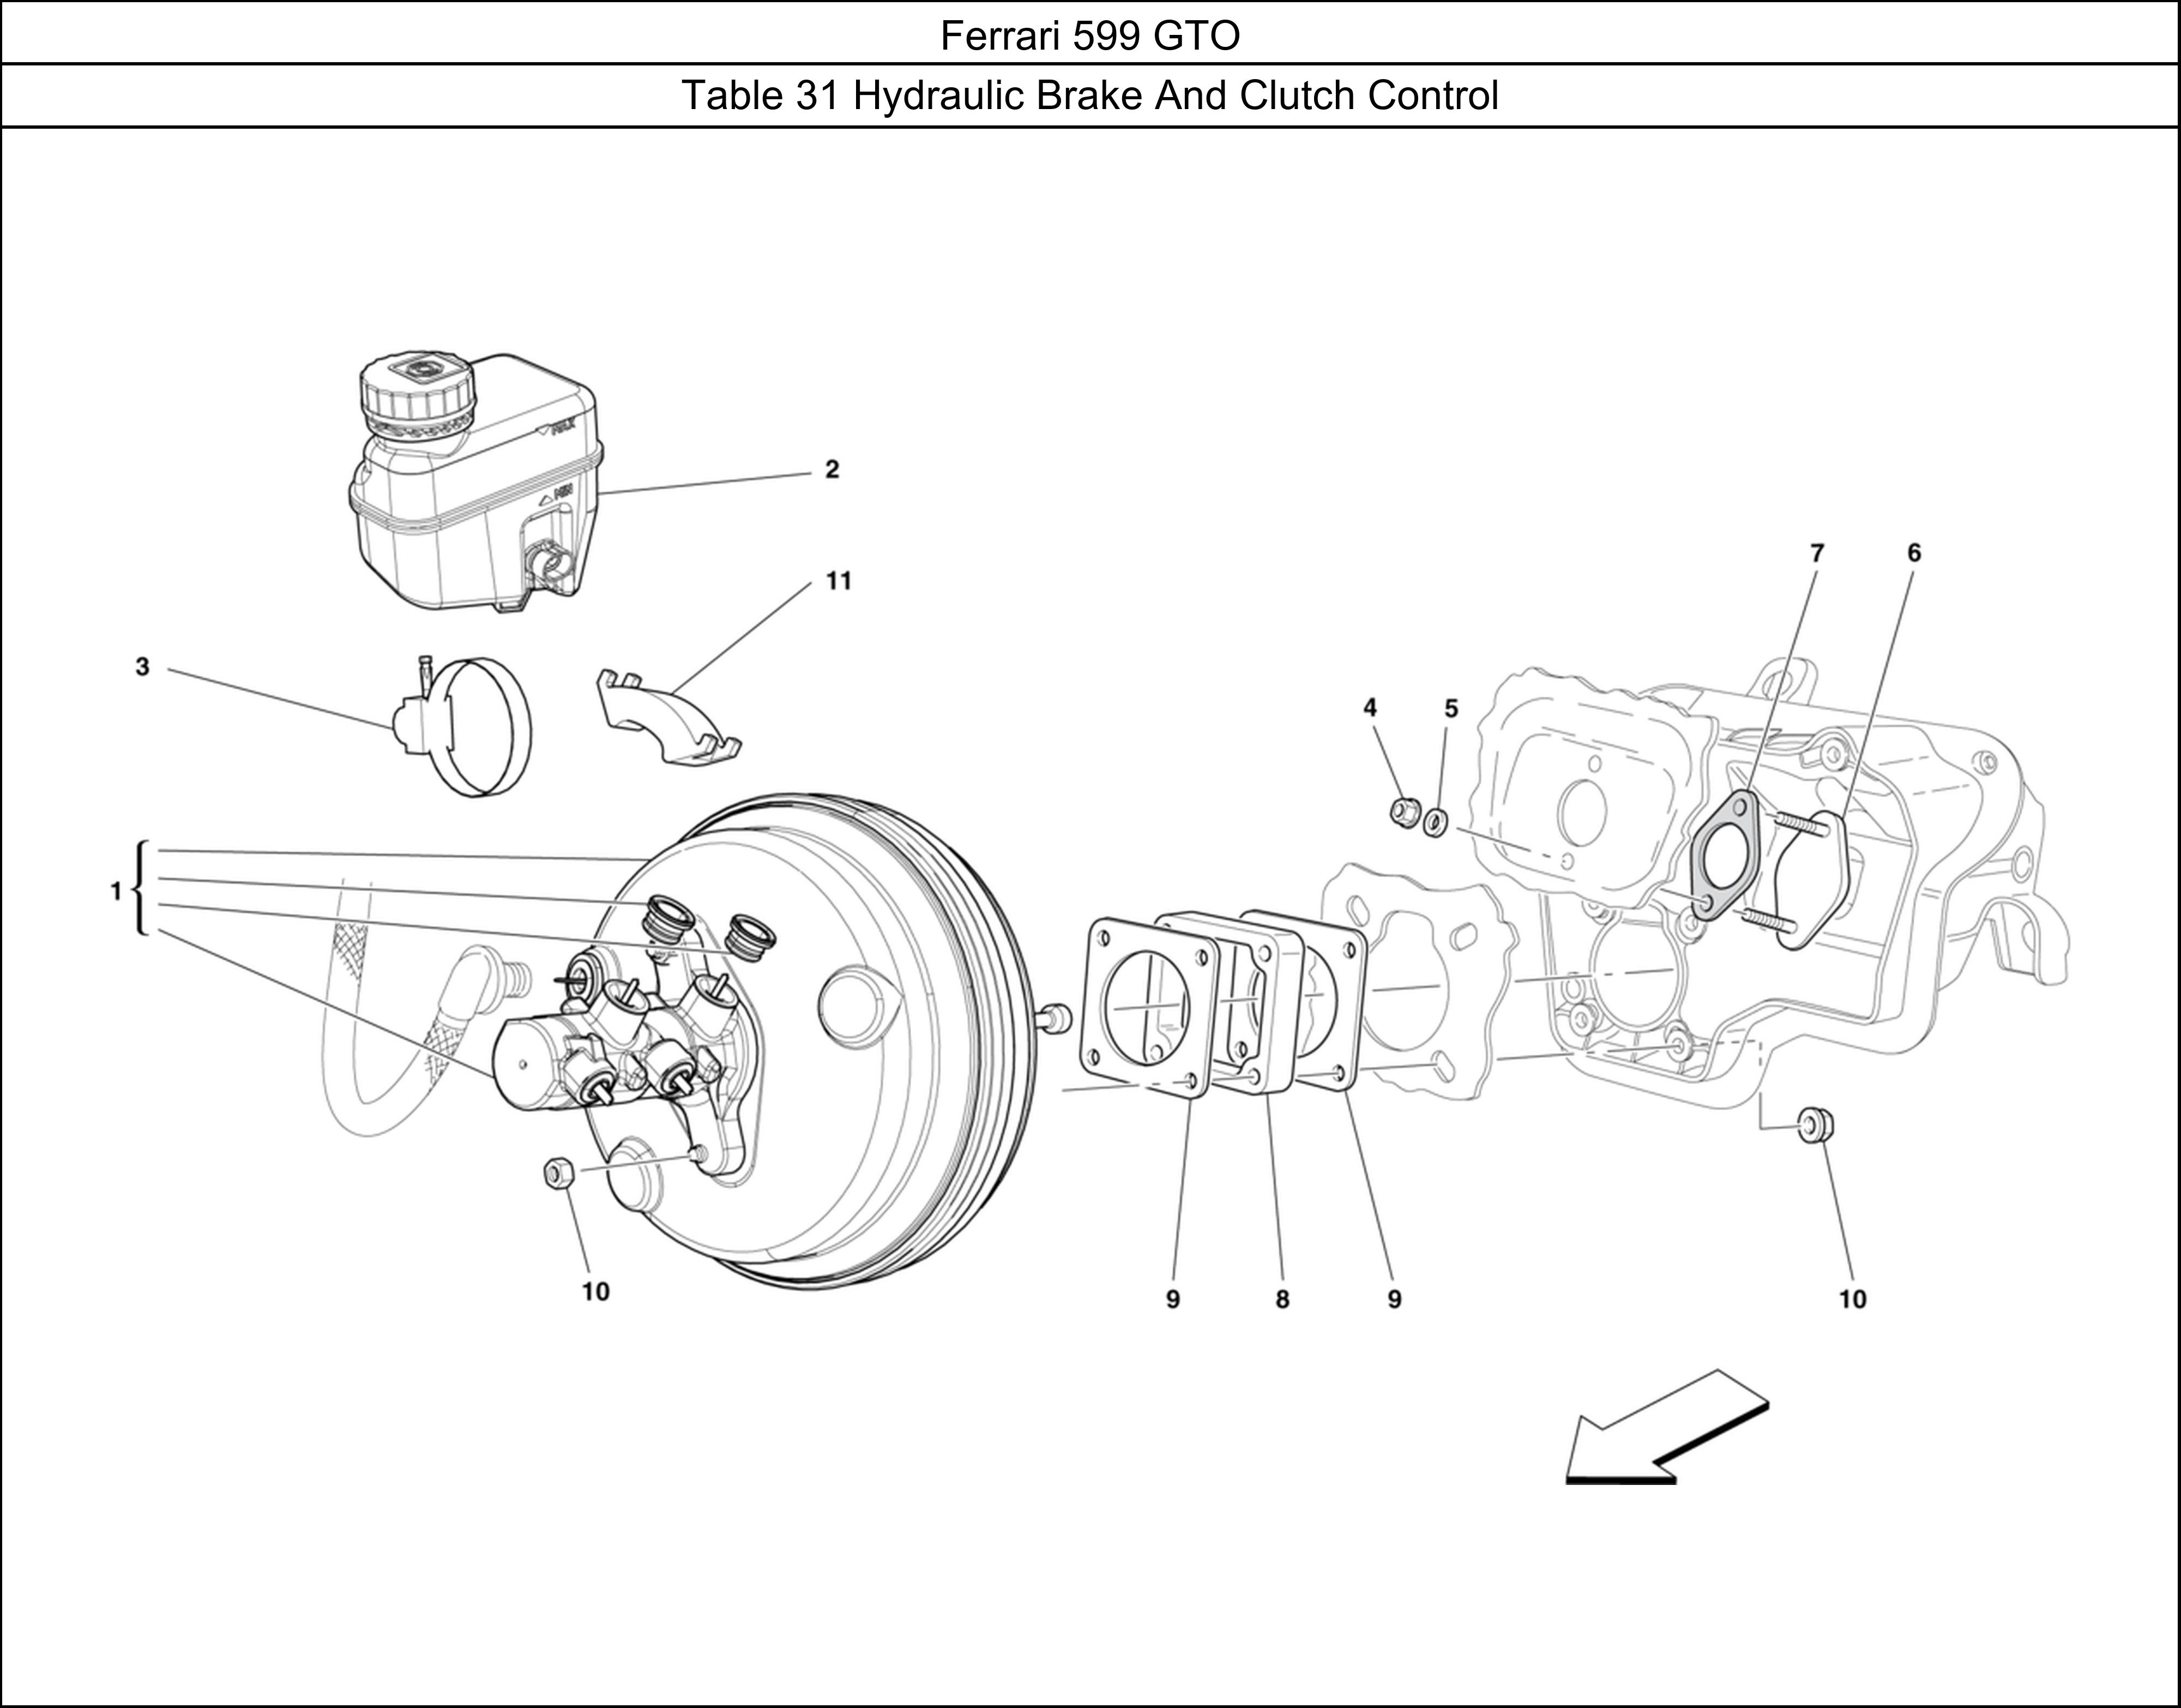 Ferrari Parts Ferrari 599 GTO Table 31 Hydraulic Brake And Clutch Control